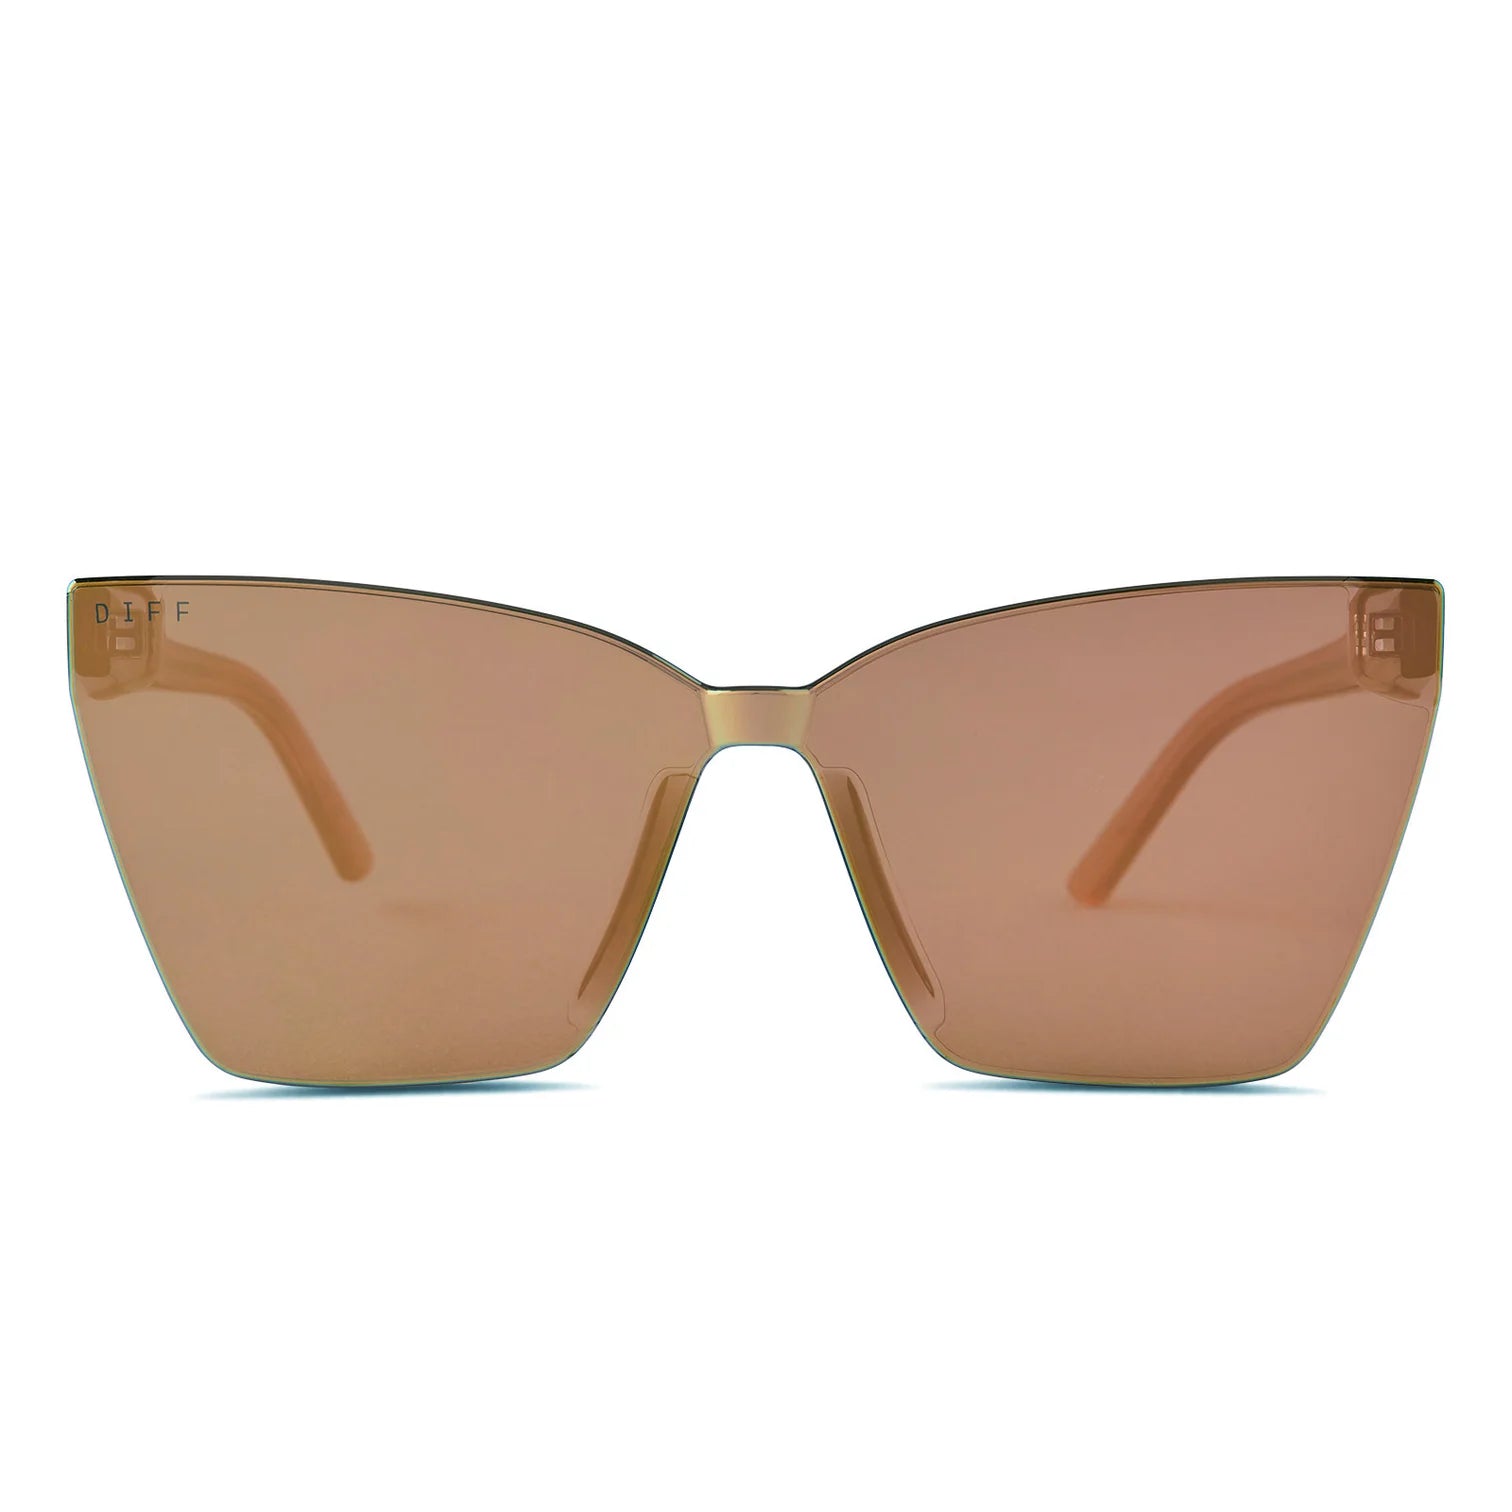 Goldie Brown Sugar + Bronze Flash | DIFF Sunglasses